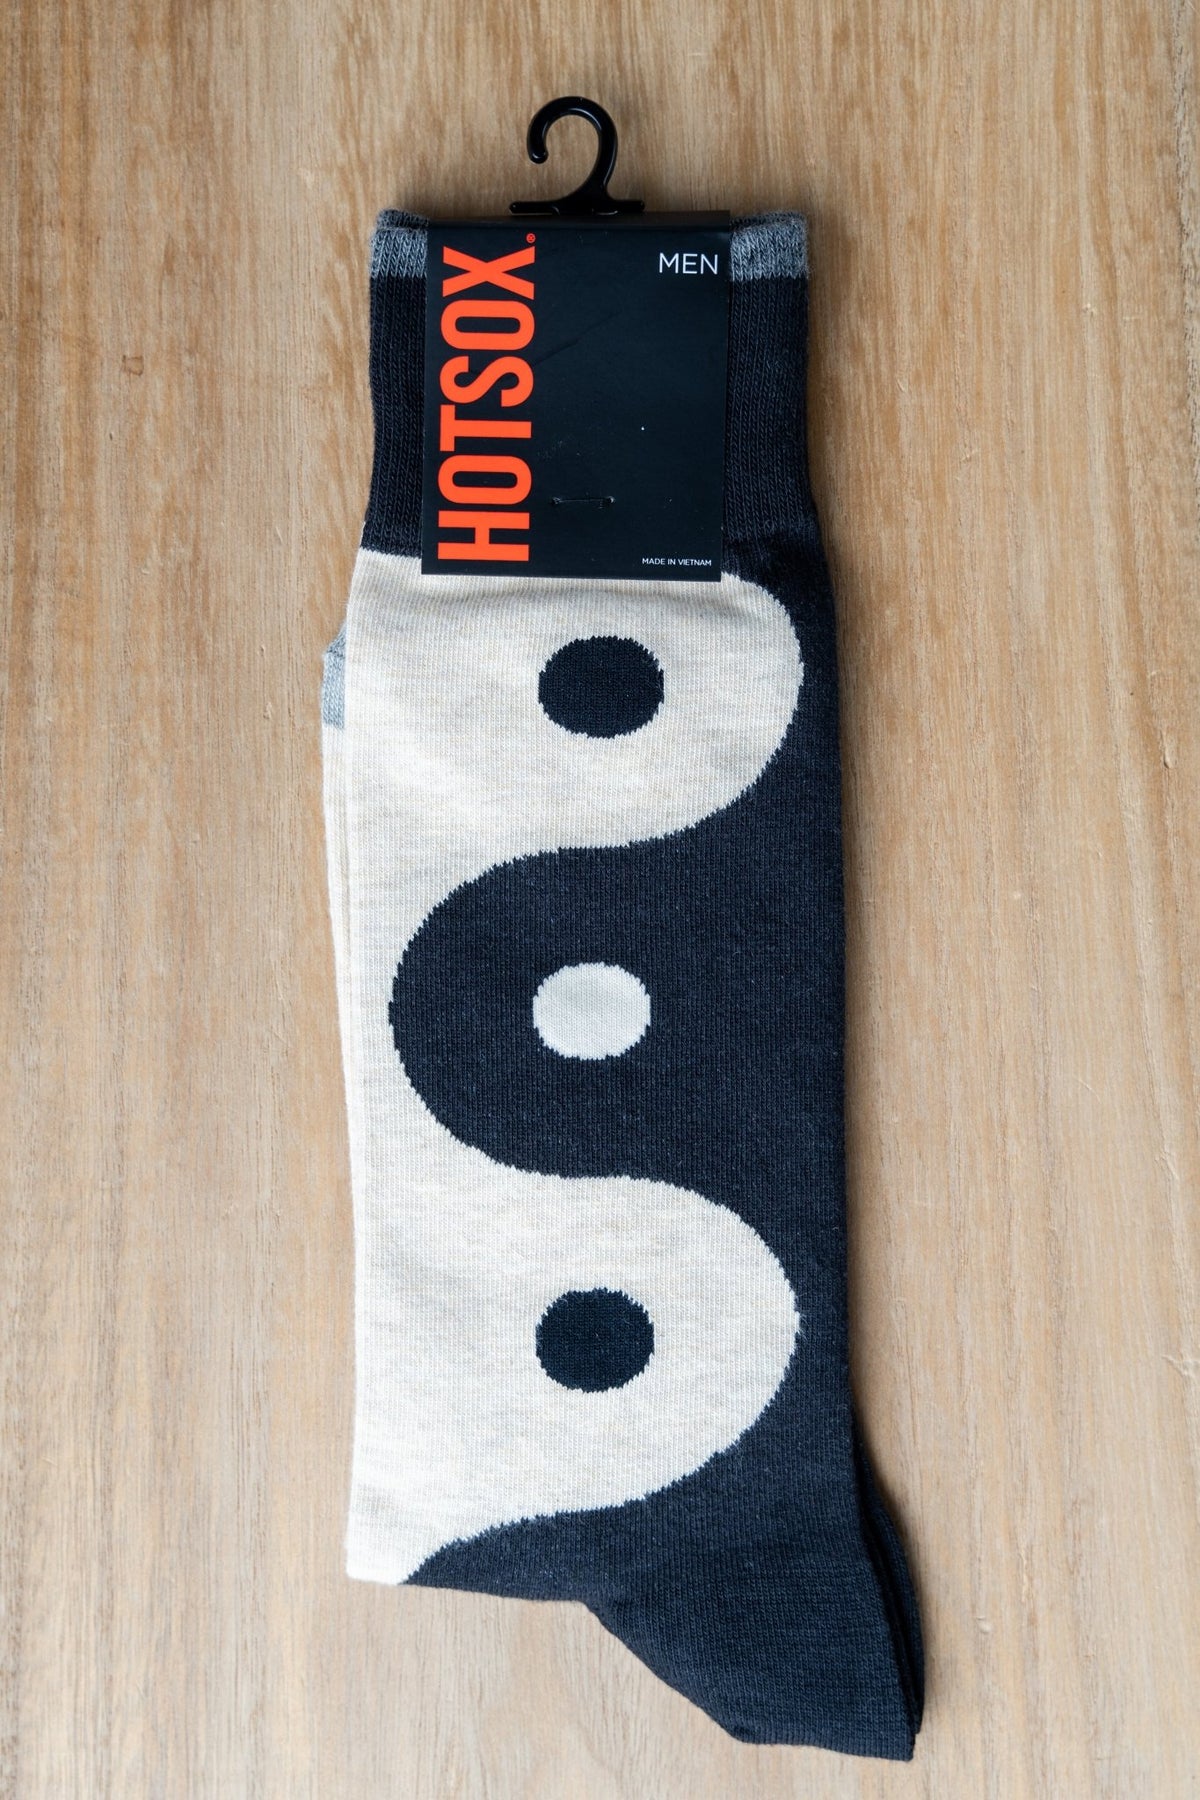 HotSox yin yang socks black - Trendy Socks at Lush Fashion Lounge Boutique in Oklahoma City